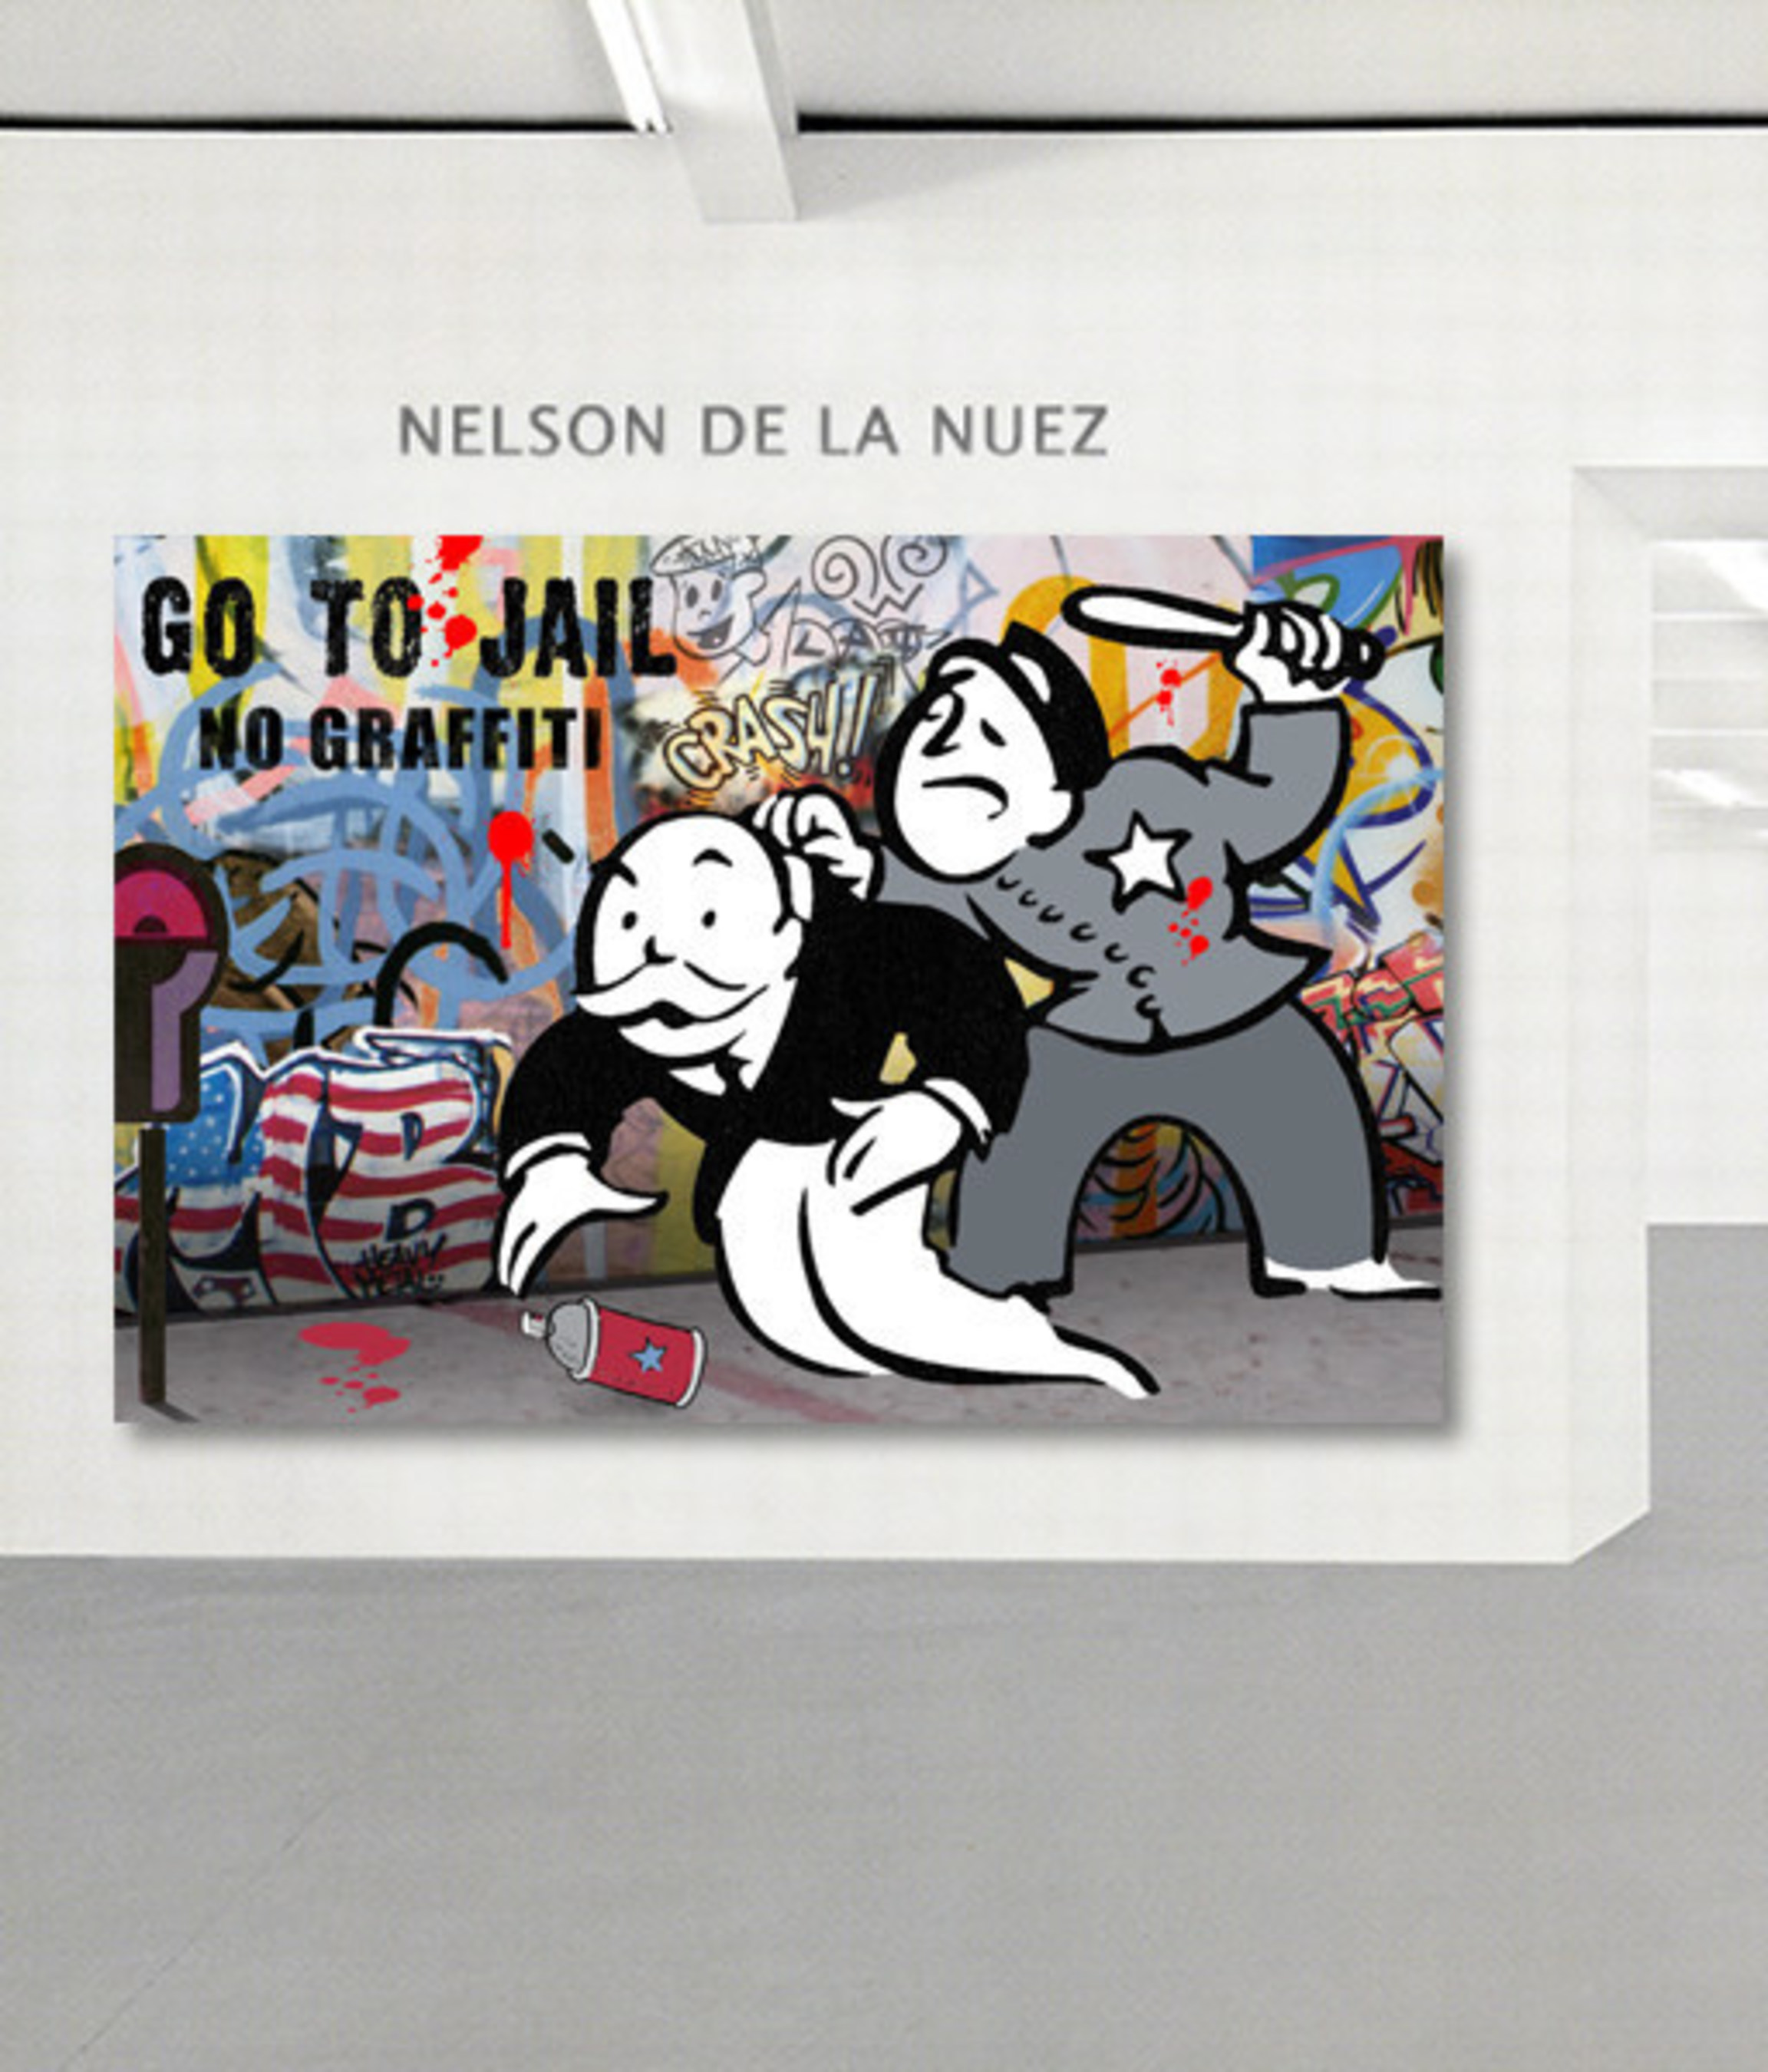 "Graffiti is Not Art:" Hand Painted 1 of a Kind on Canvas, King of Pop Art Nelson De La Nuez